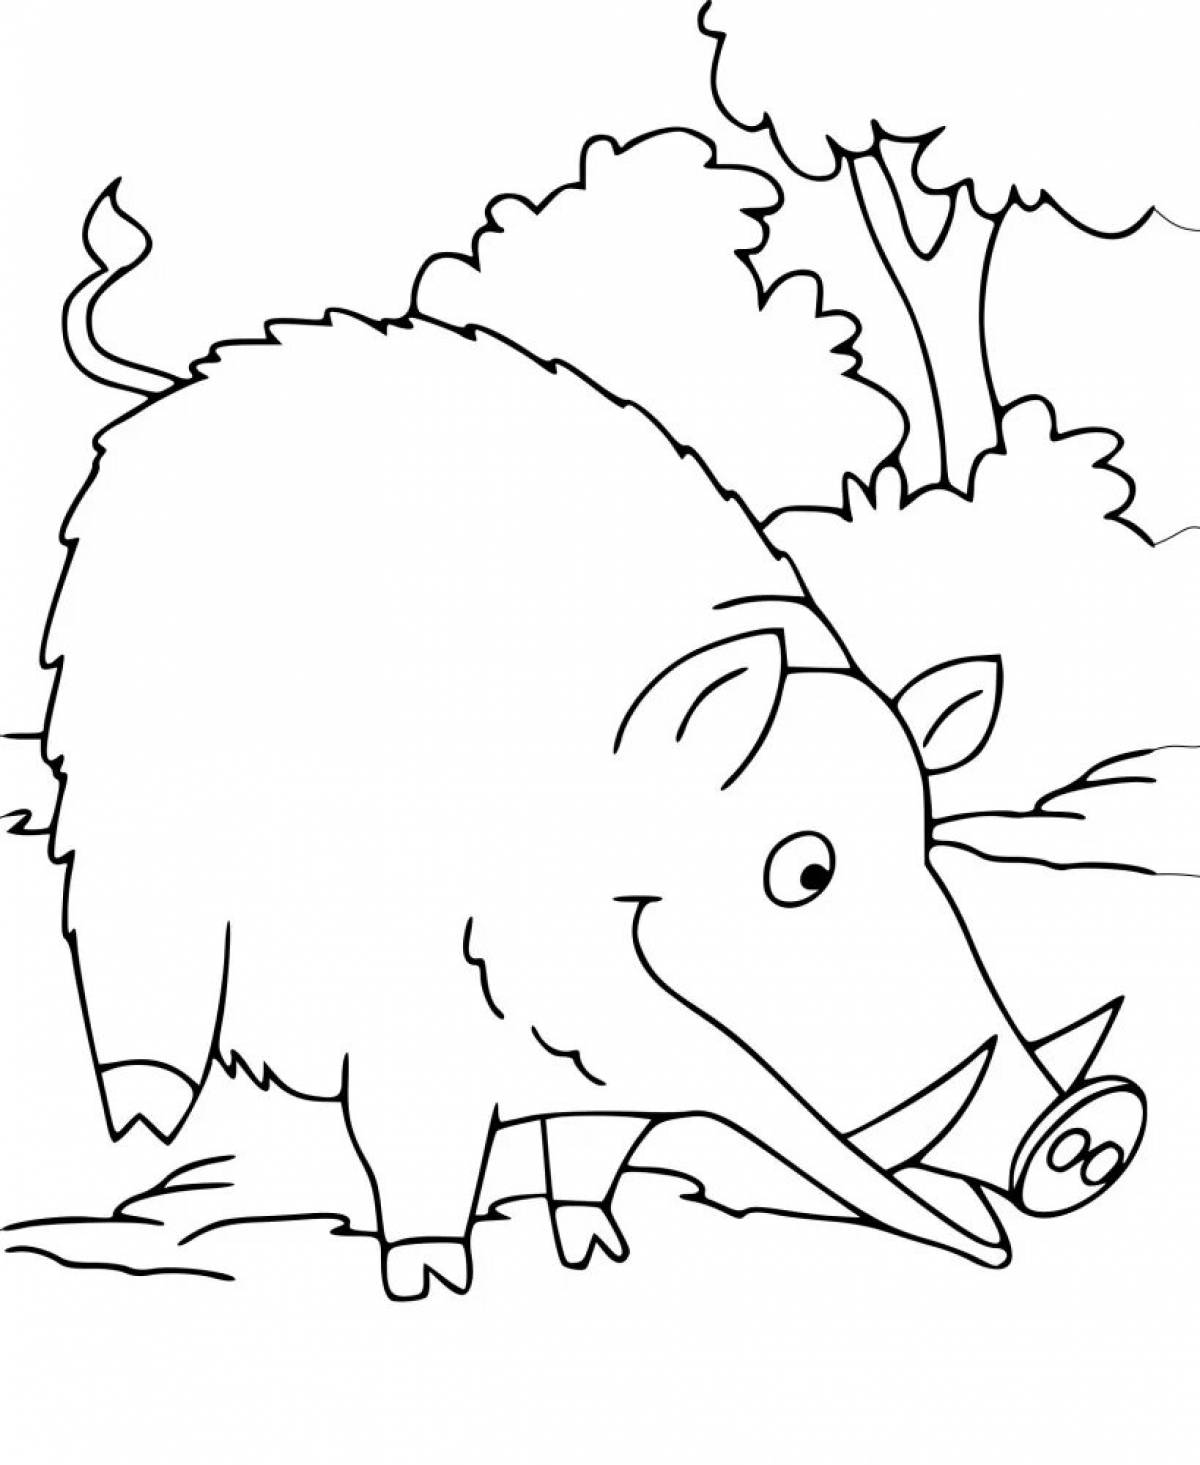 Coloring book shining boar